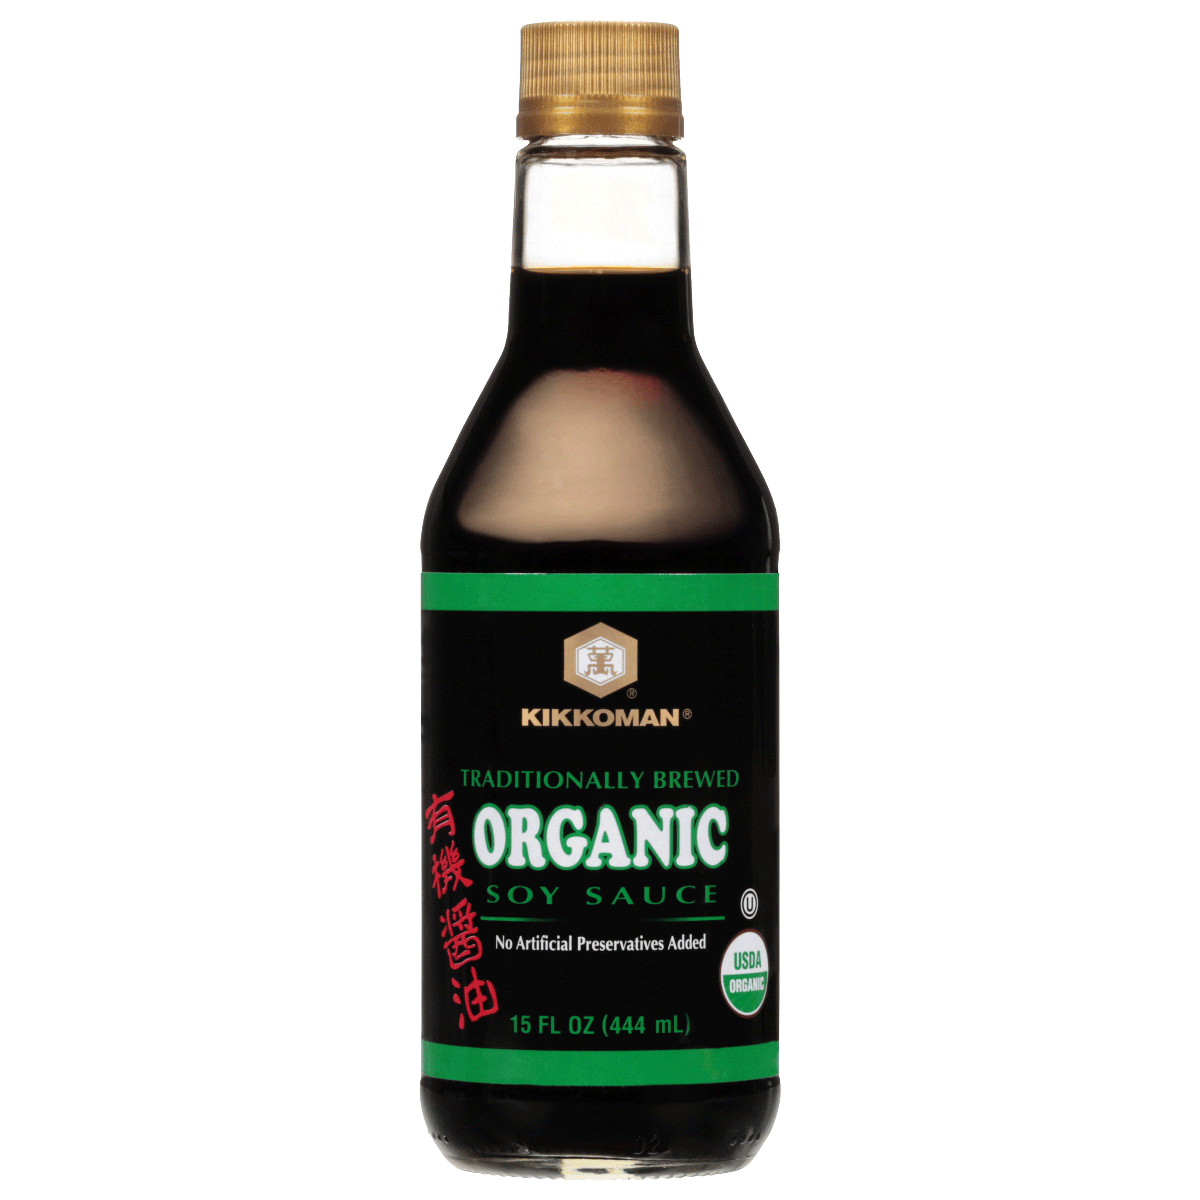 15 FL OZ Organic Soy Sauce